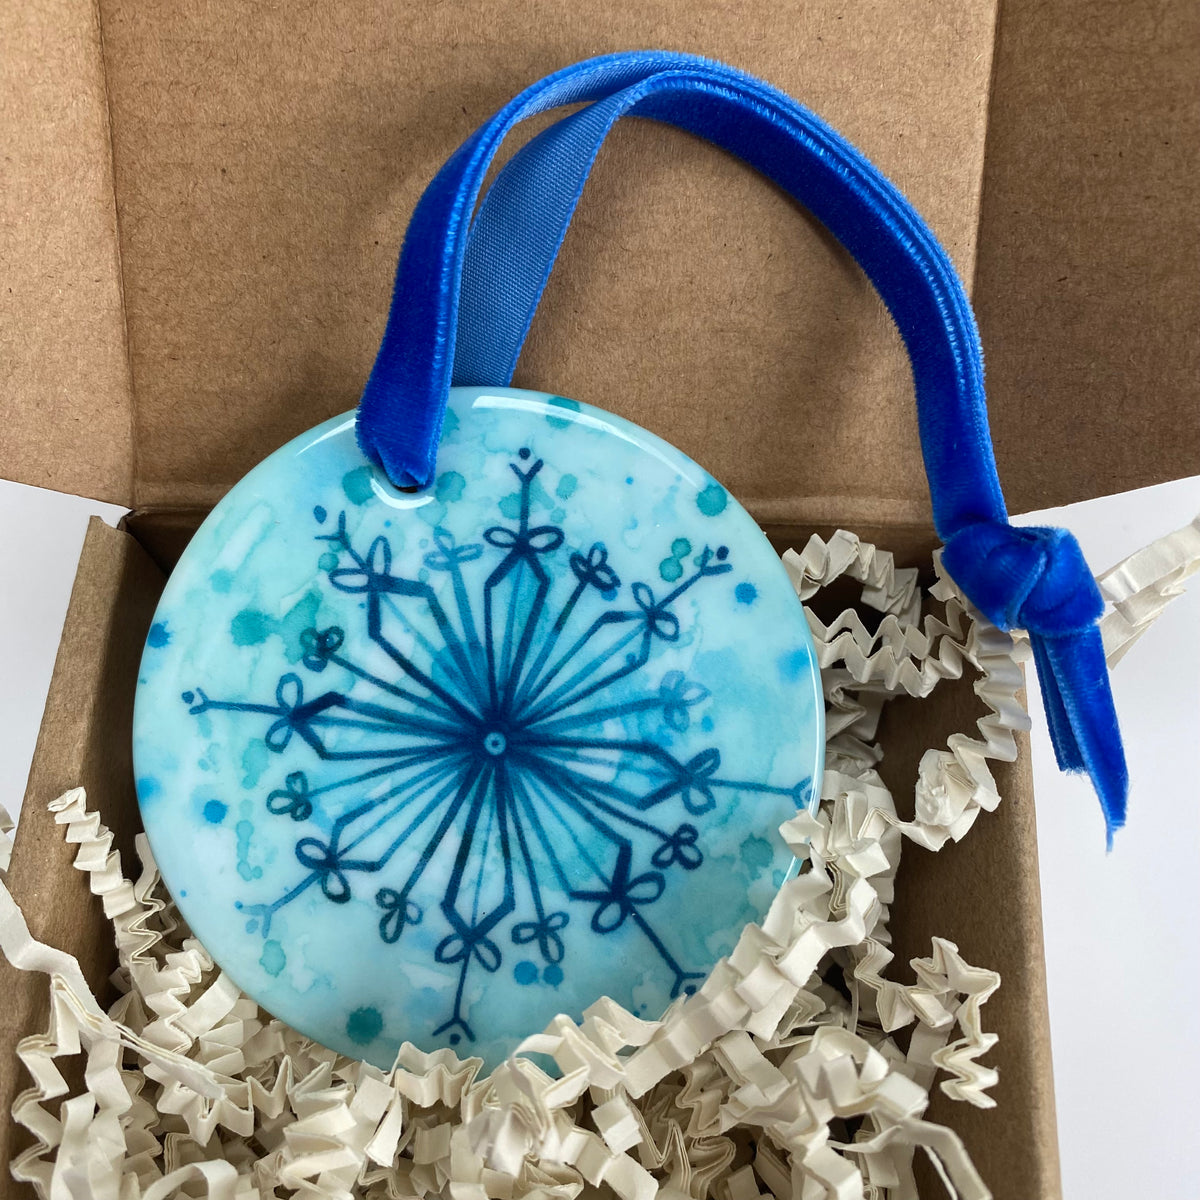 KRAFT BOX-Ceramic Ornament with Turquoise Blue Snowflake Print